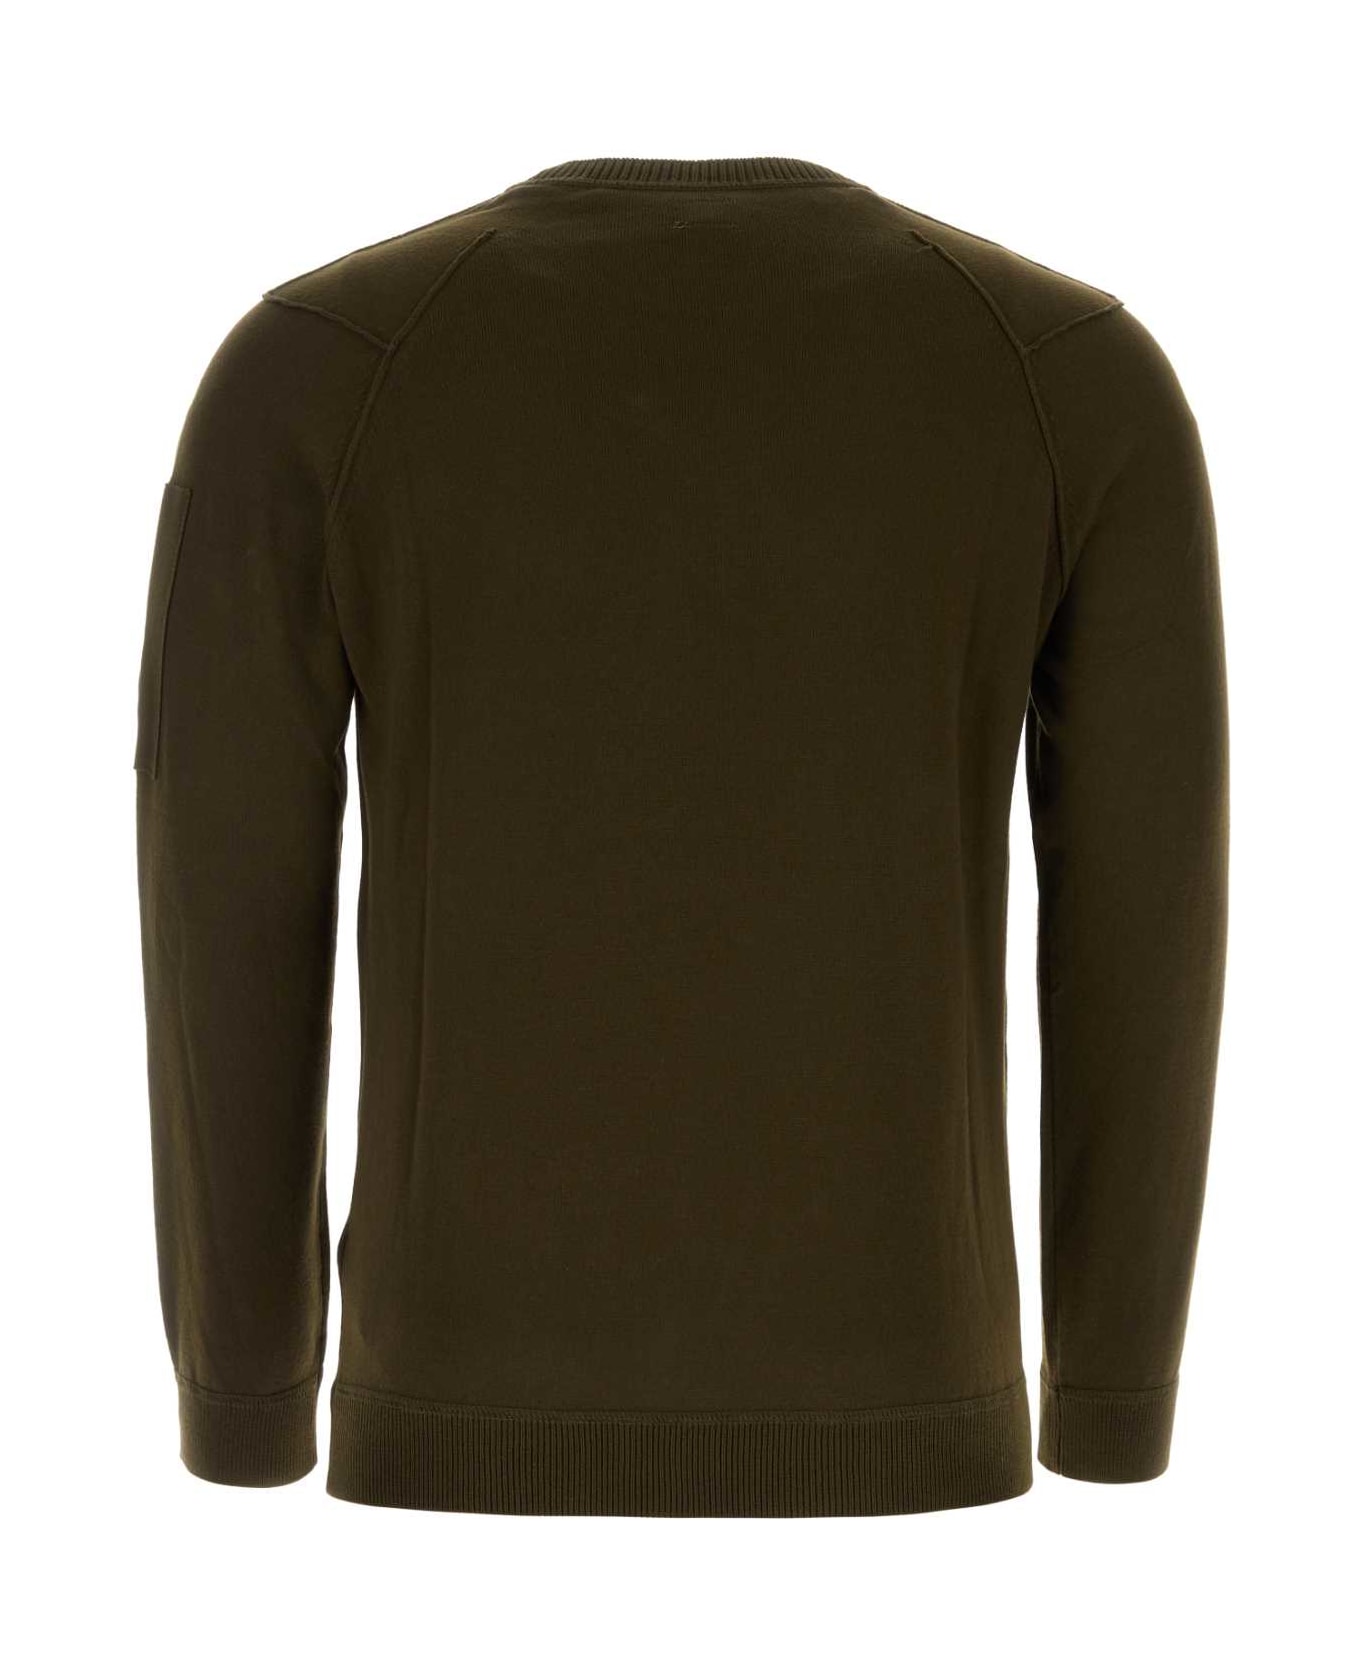 C.P. Company Dark Green Cotton Sweater - IVYGREEN